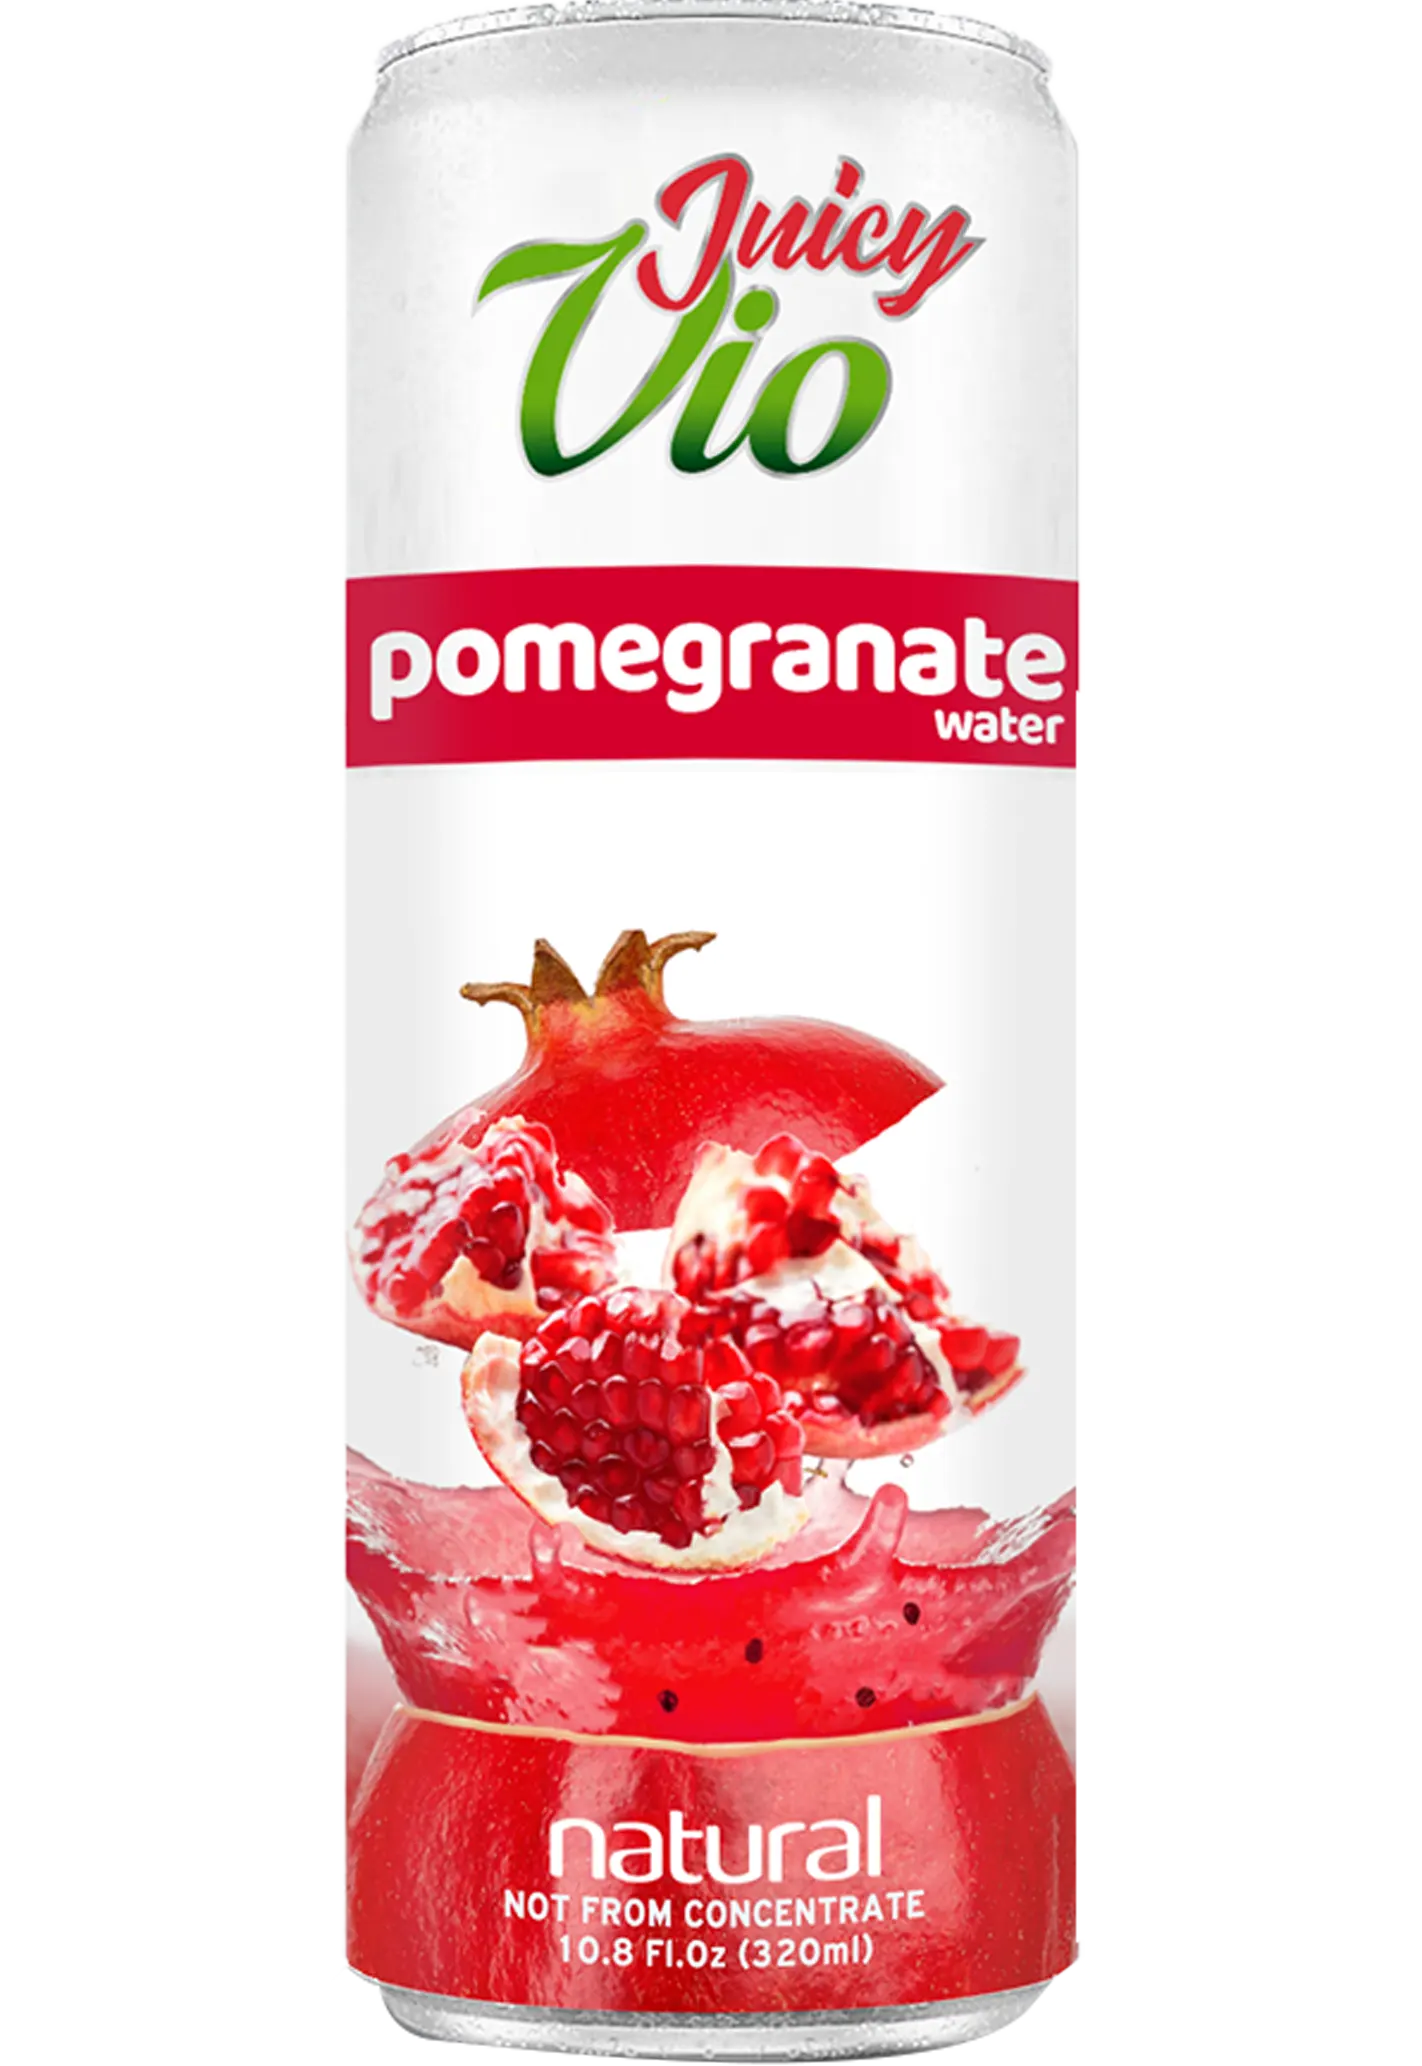 pomegranate juice benefits, pomegranate juice, pomegranate benefits